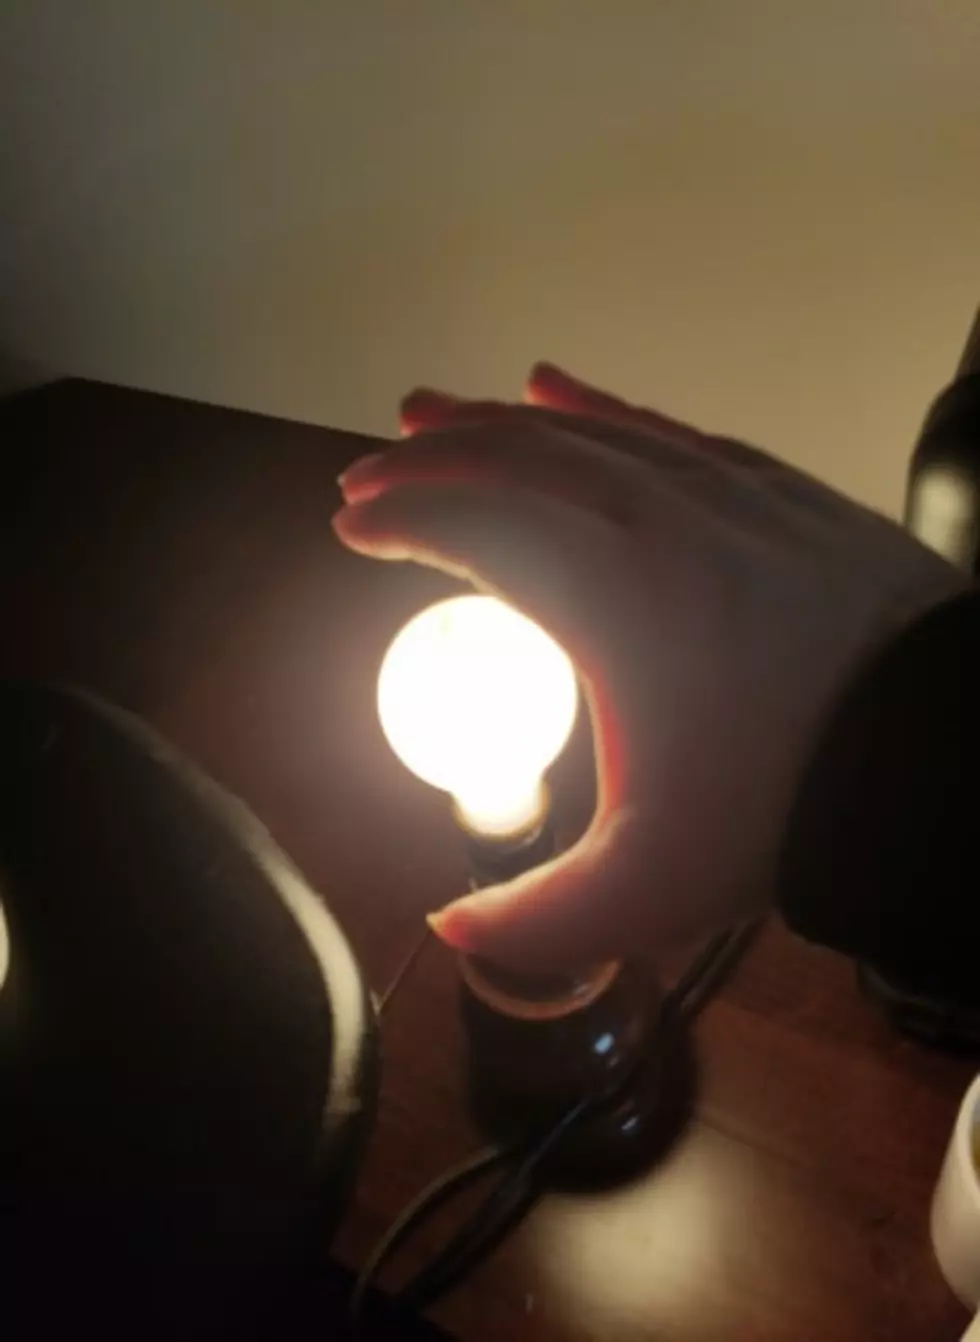 It's Not A Good Idea To Touch Hot Light Bulbs